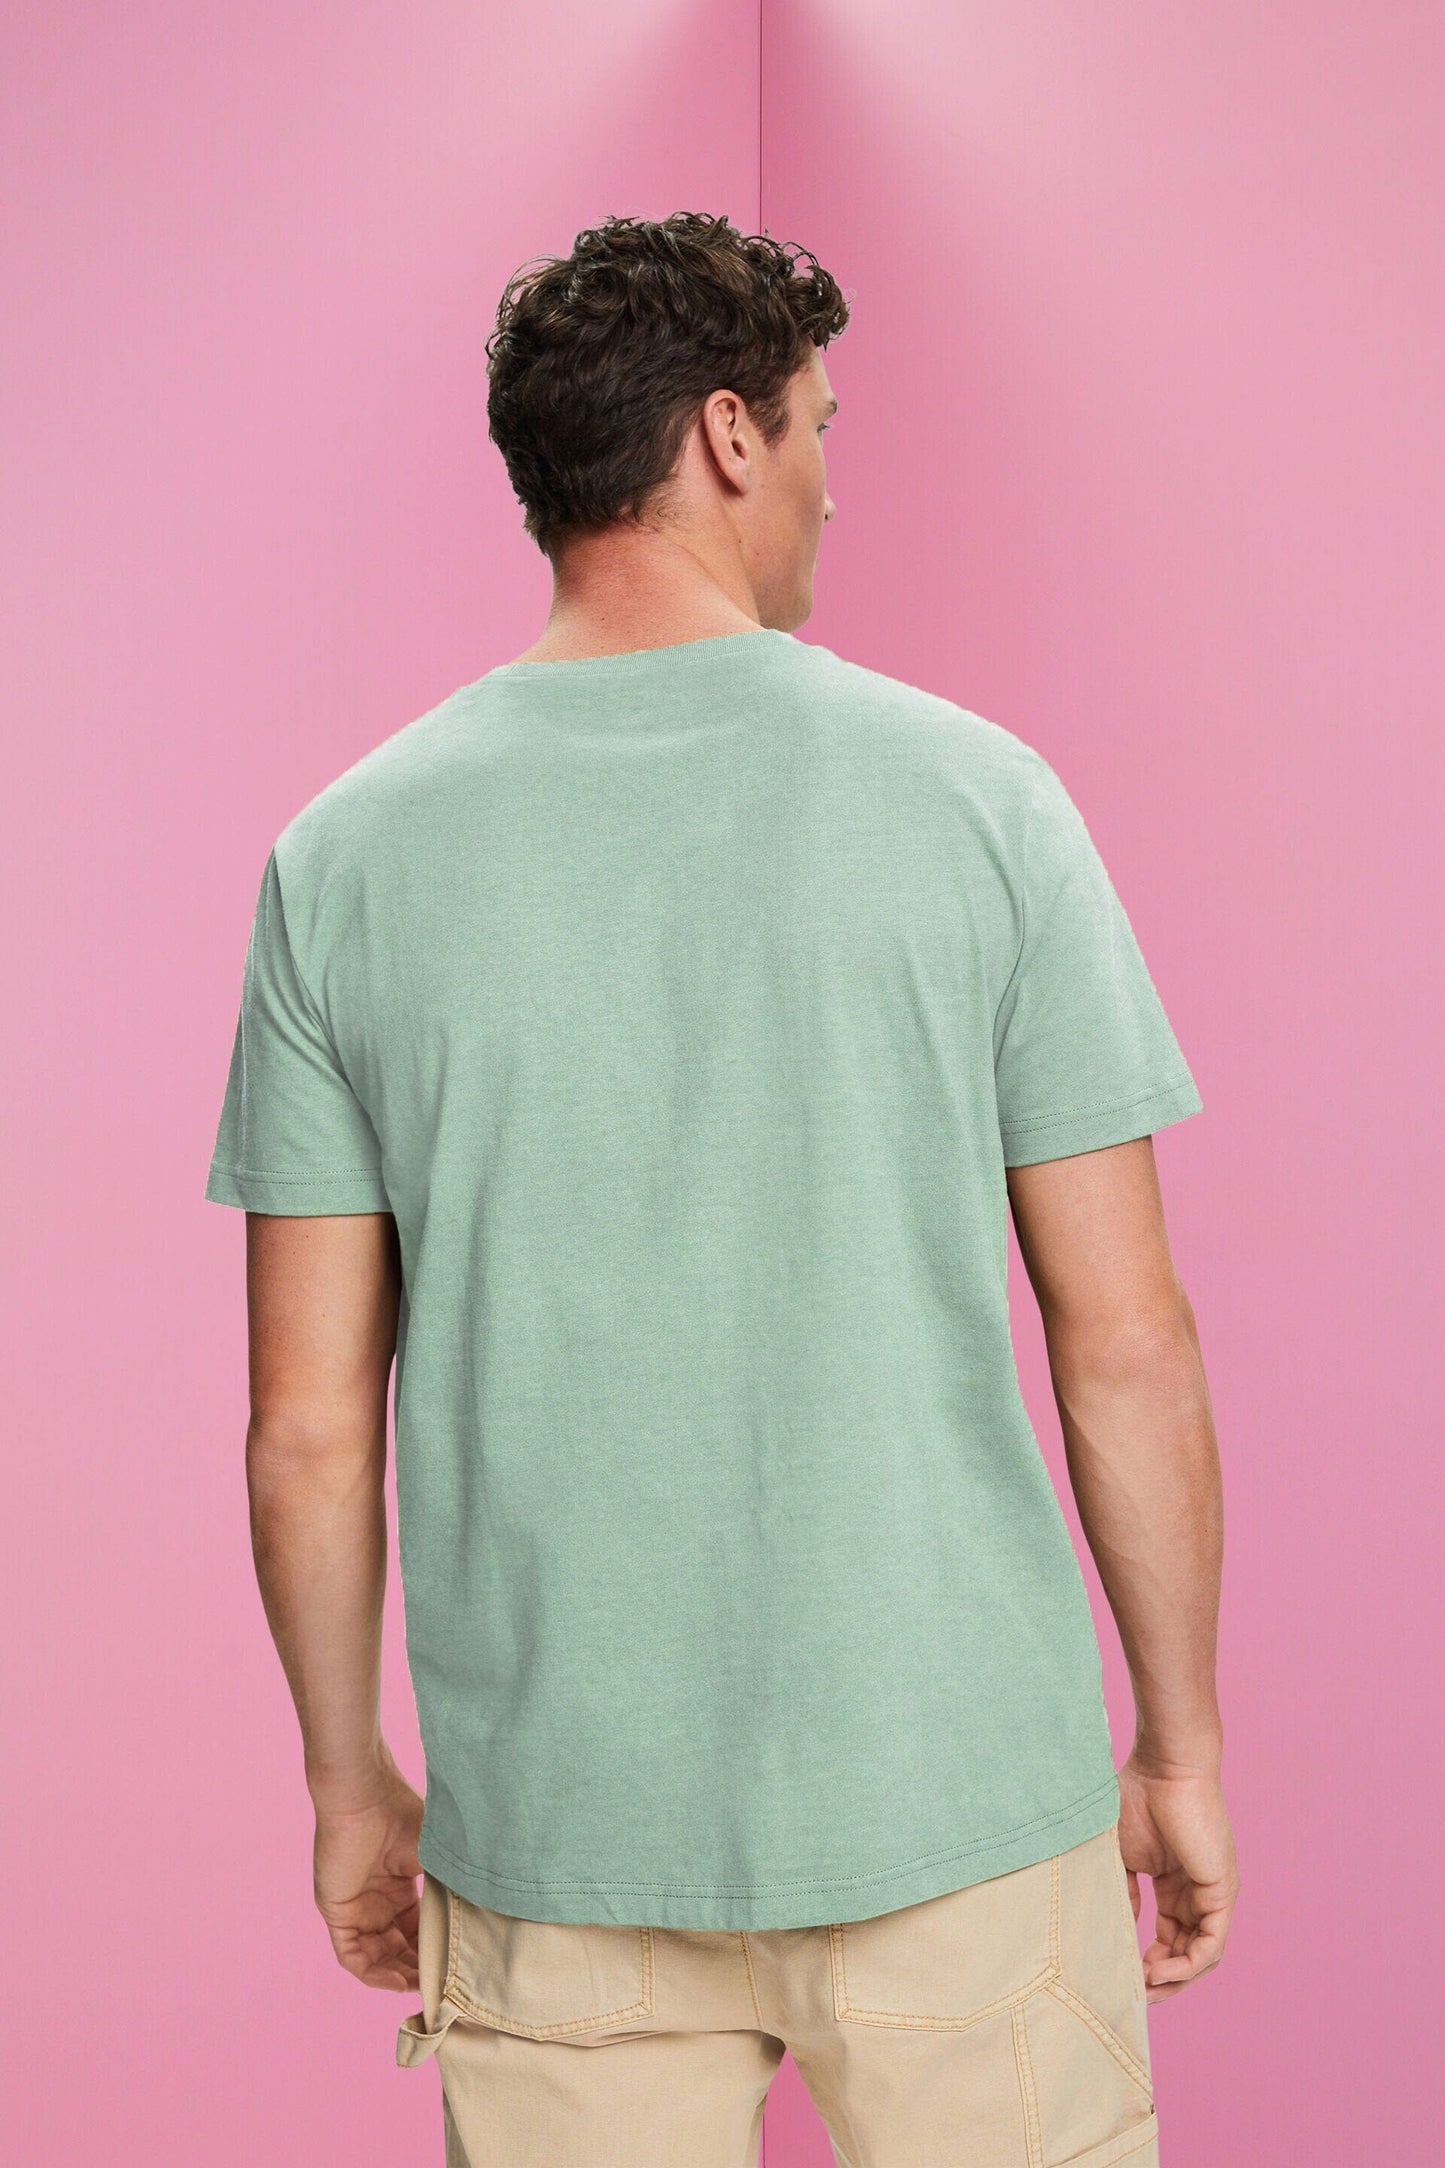 Blend Men's California Printed Tee Shirt Men's Tee Shirt IST 